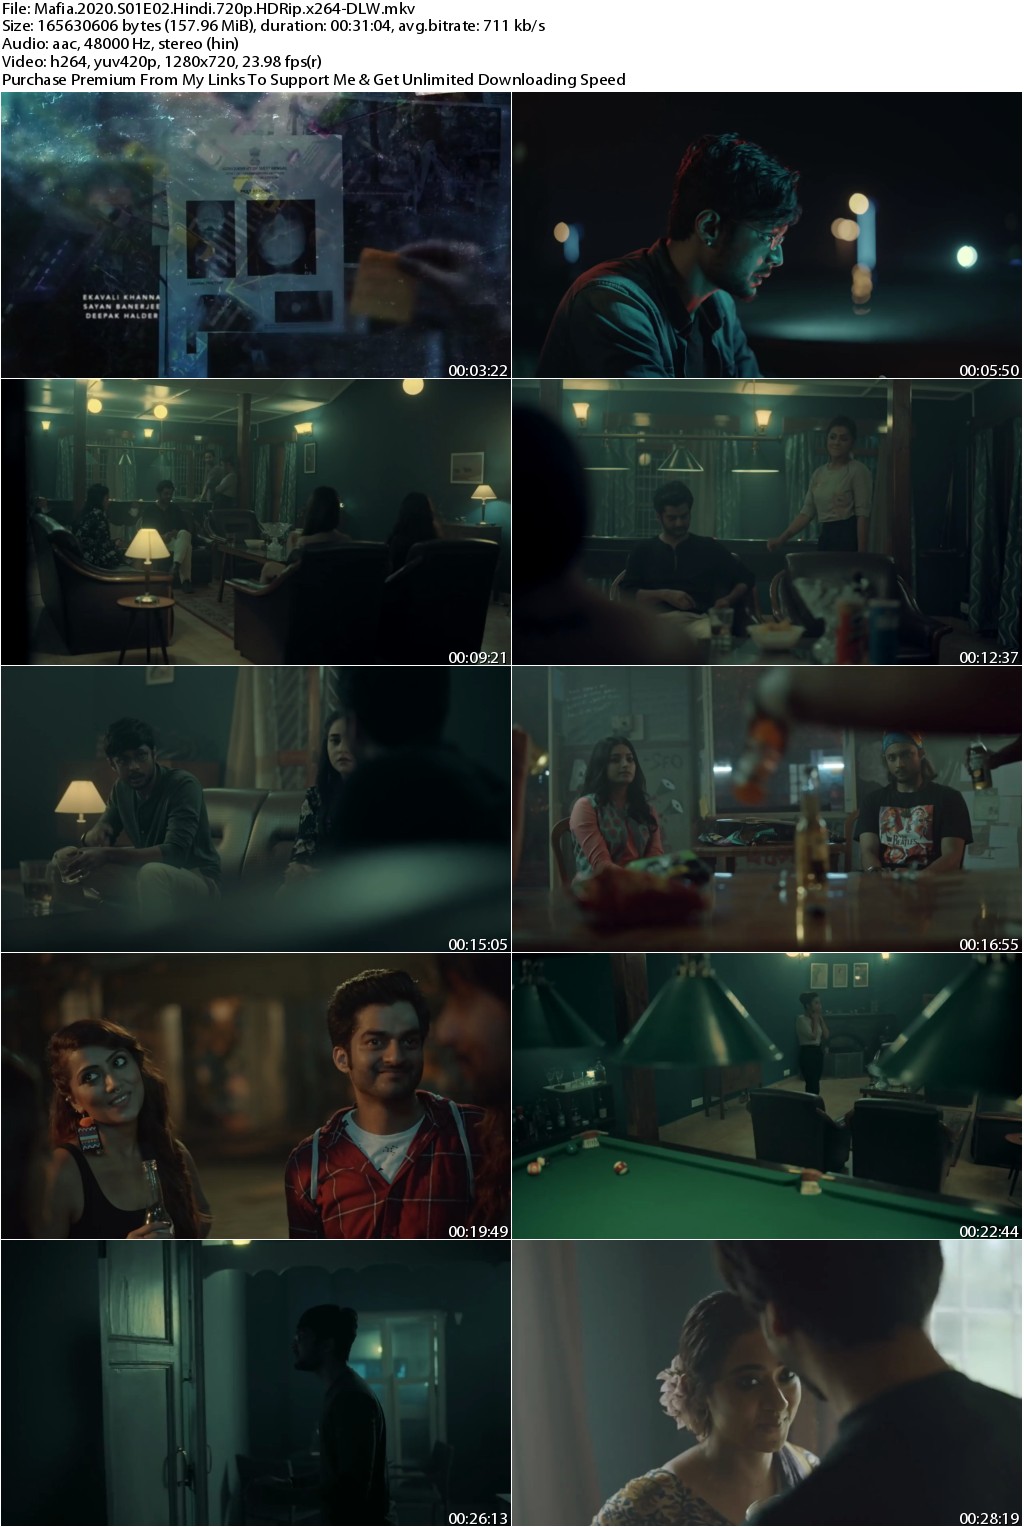 Mafia 2020 Season 01 Complete Hindi 720p HDRip x264 1.25GB-DLW